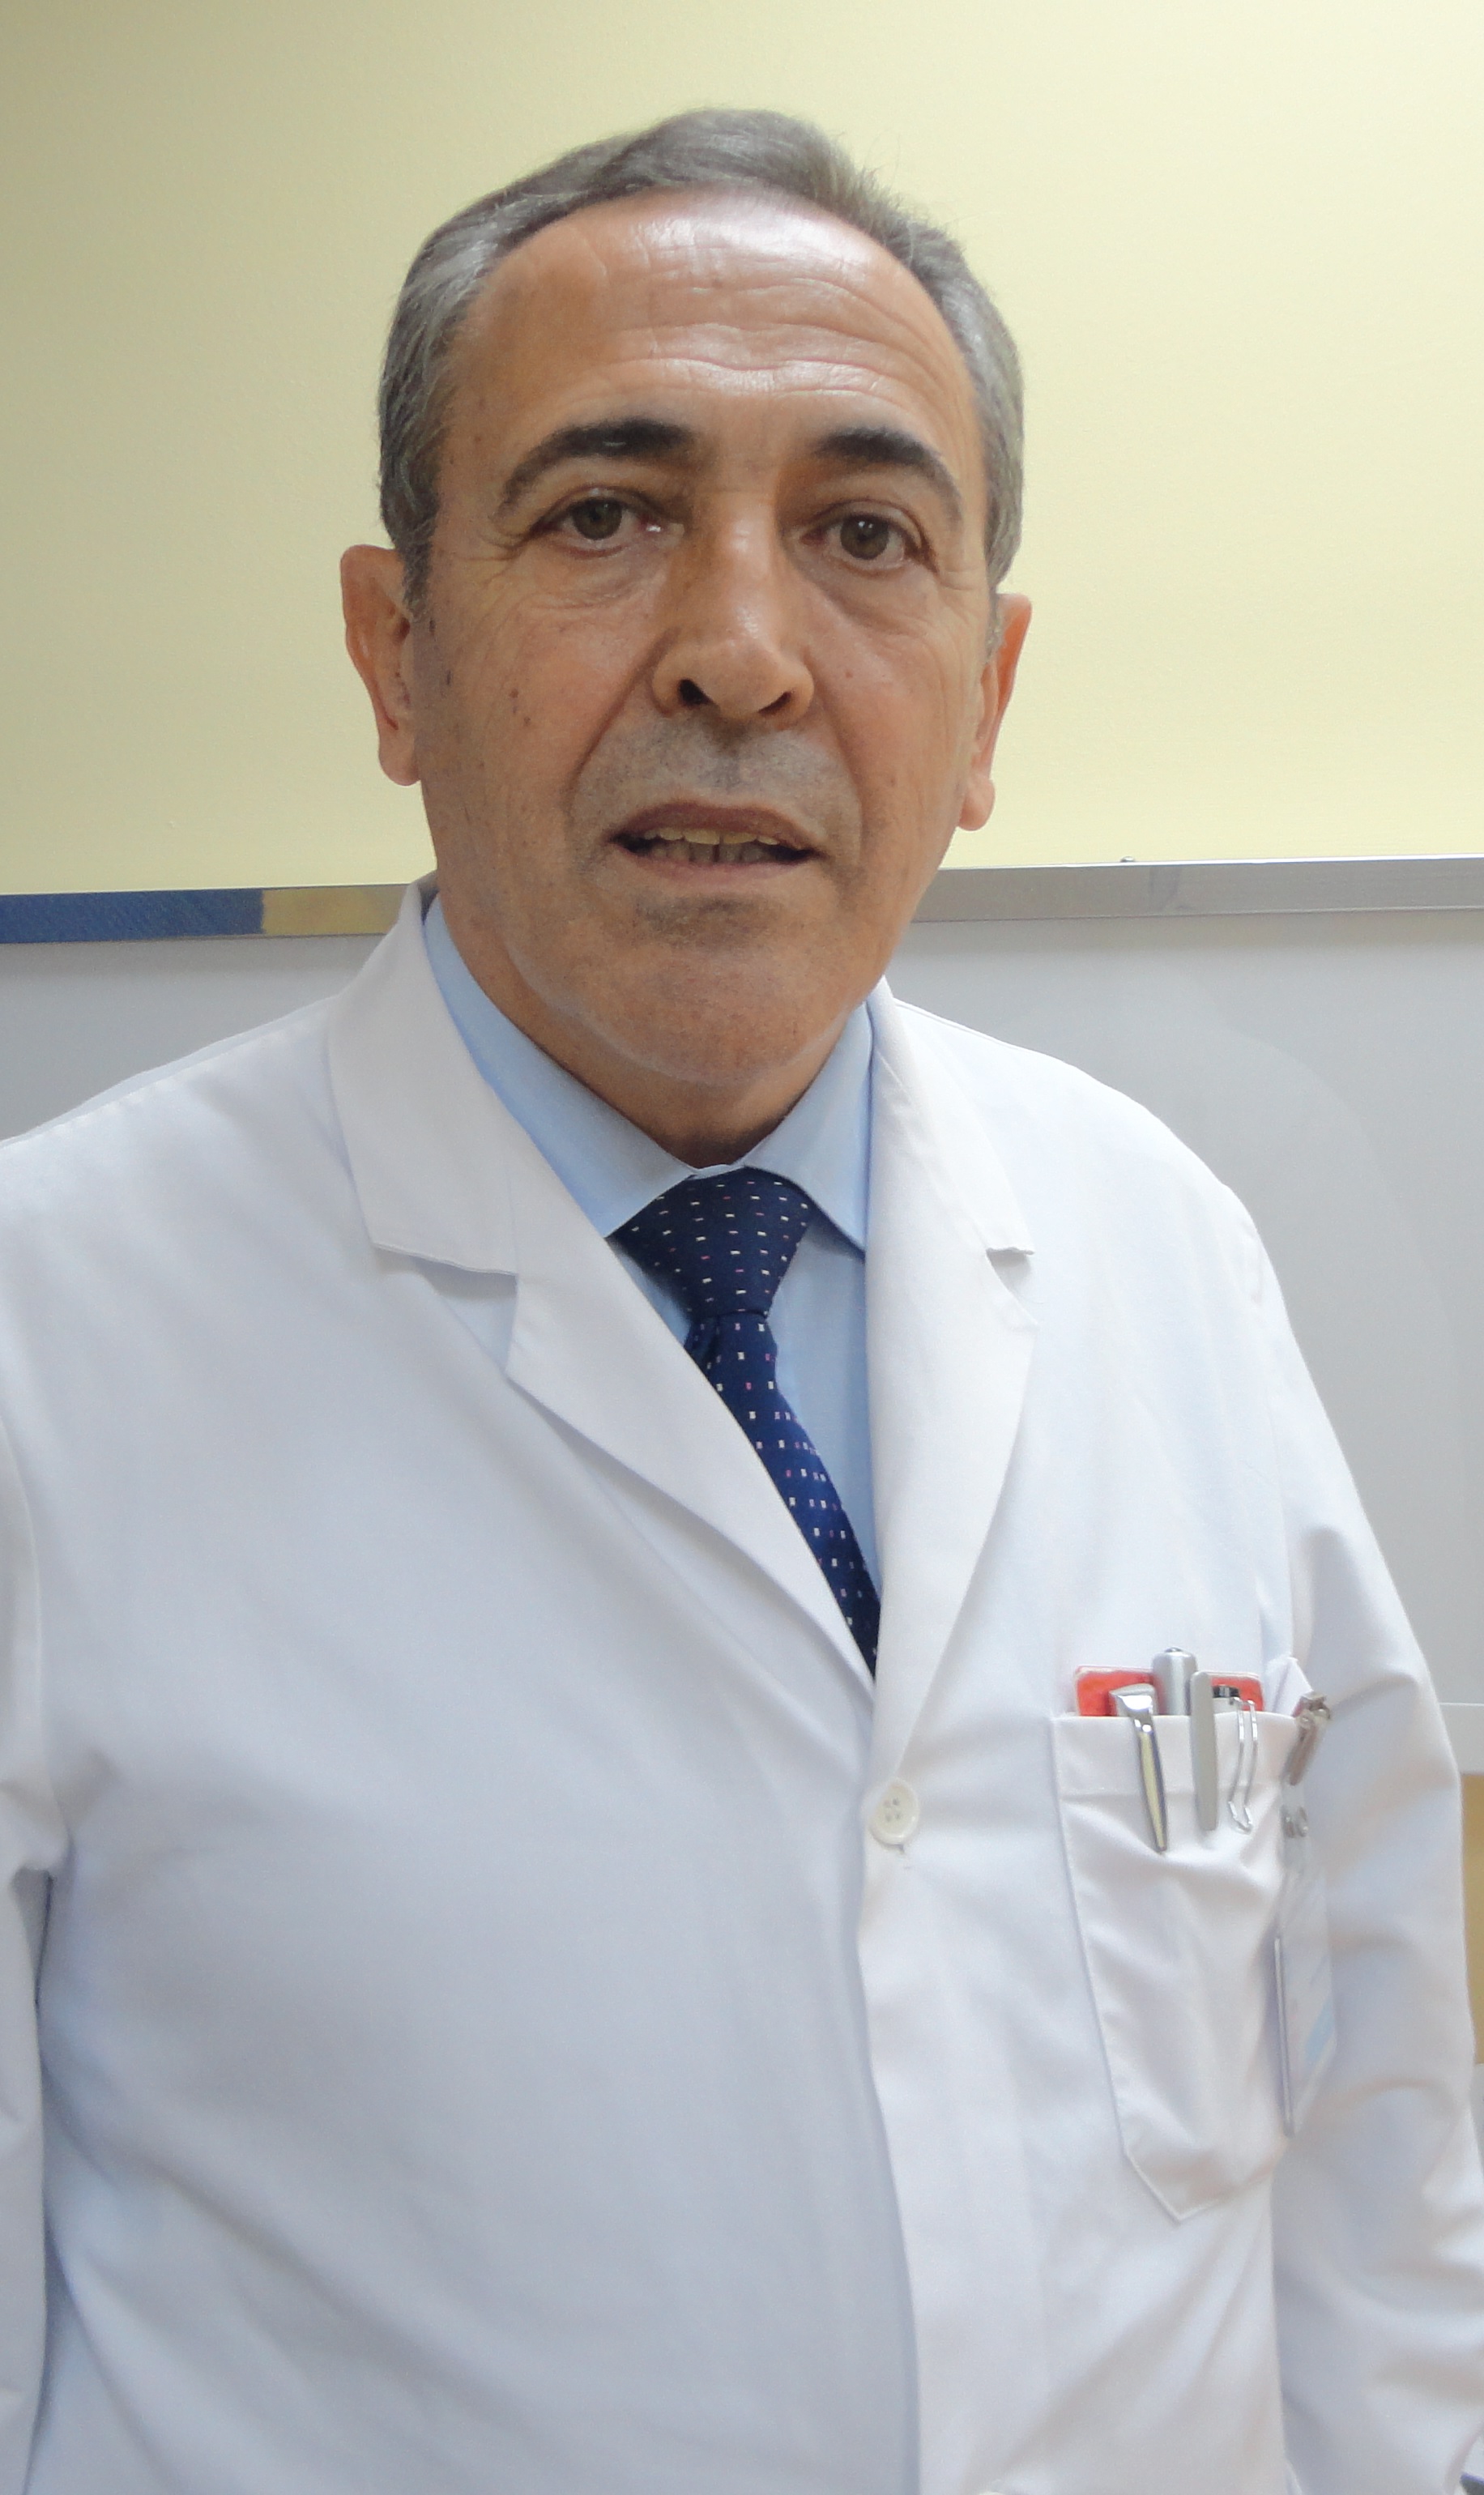 Dr. López Martín